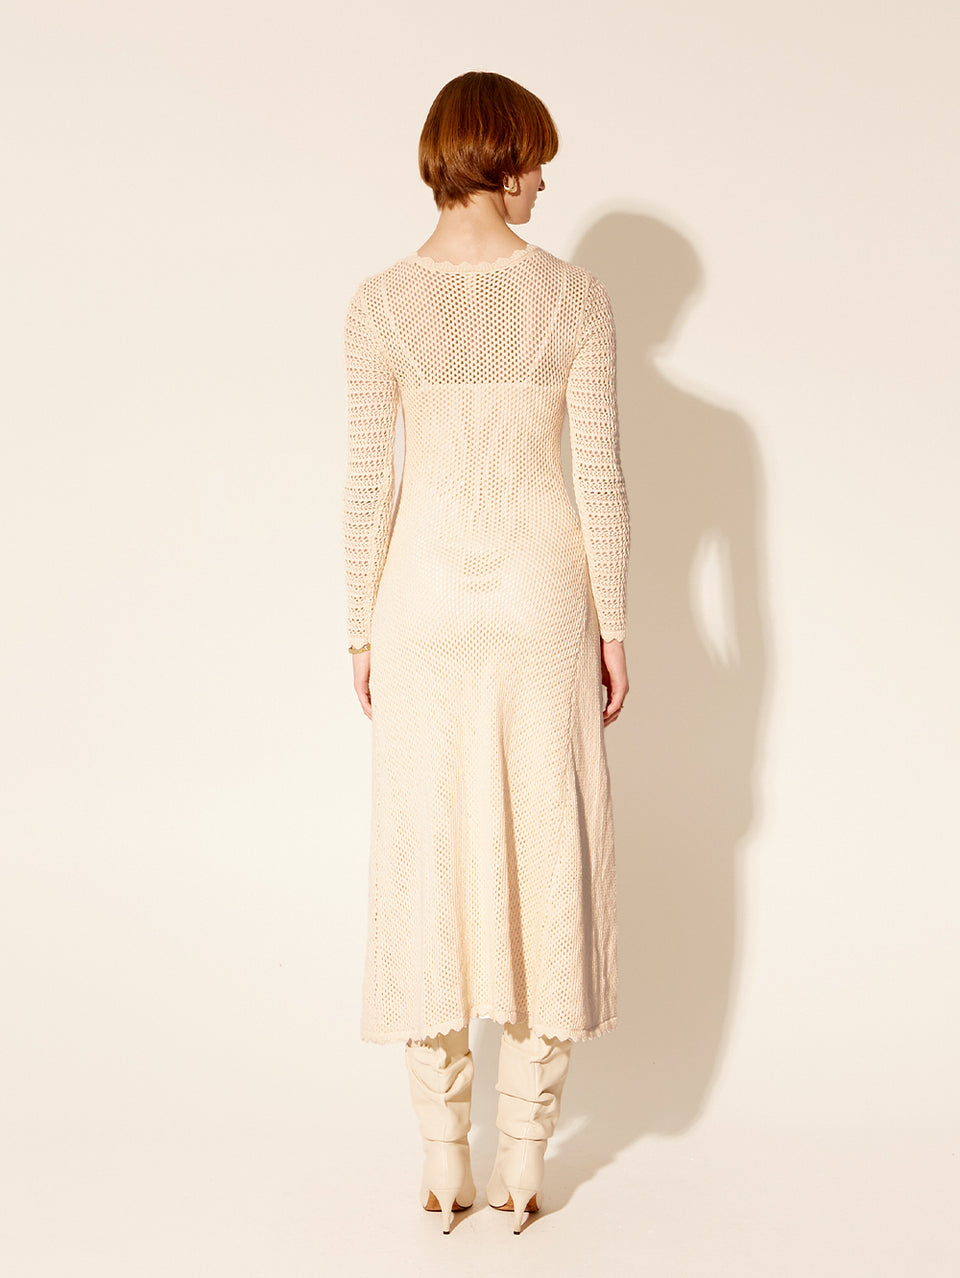 Ingrid Knit Midi Dress KIVARI | Model wears white knit dress back view